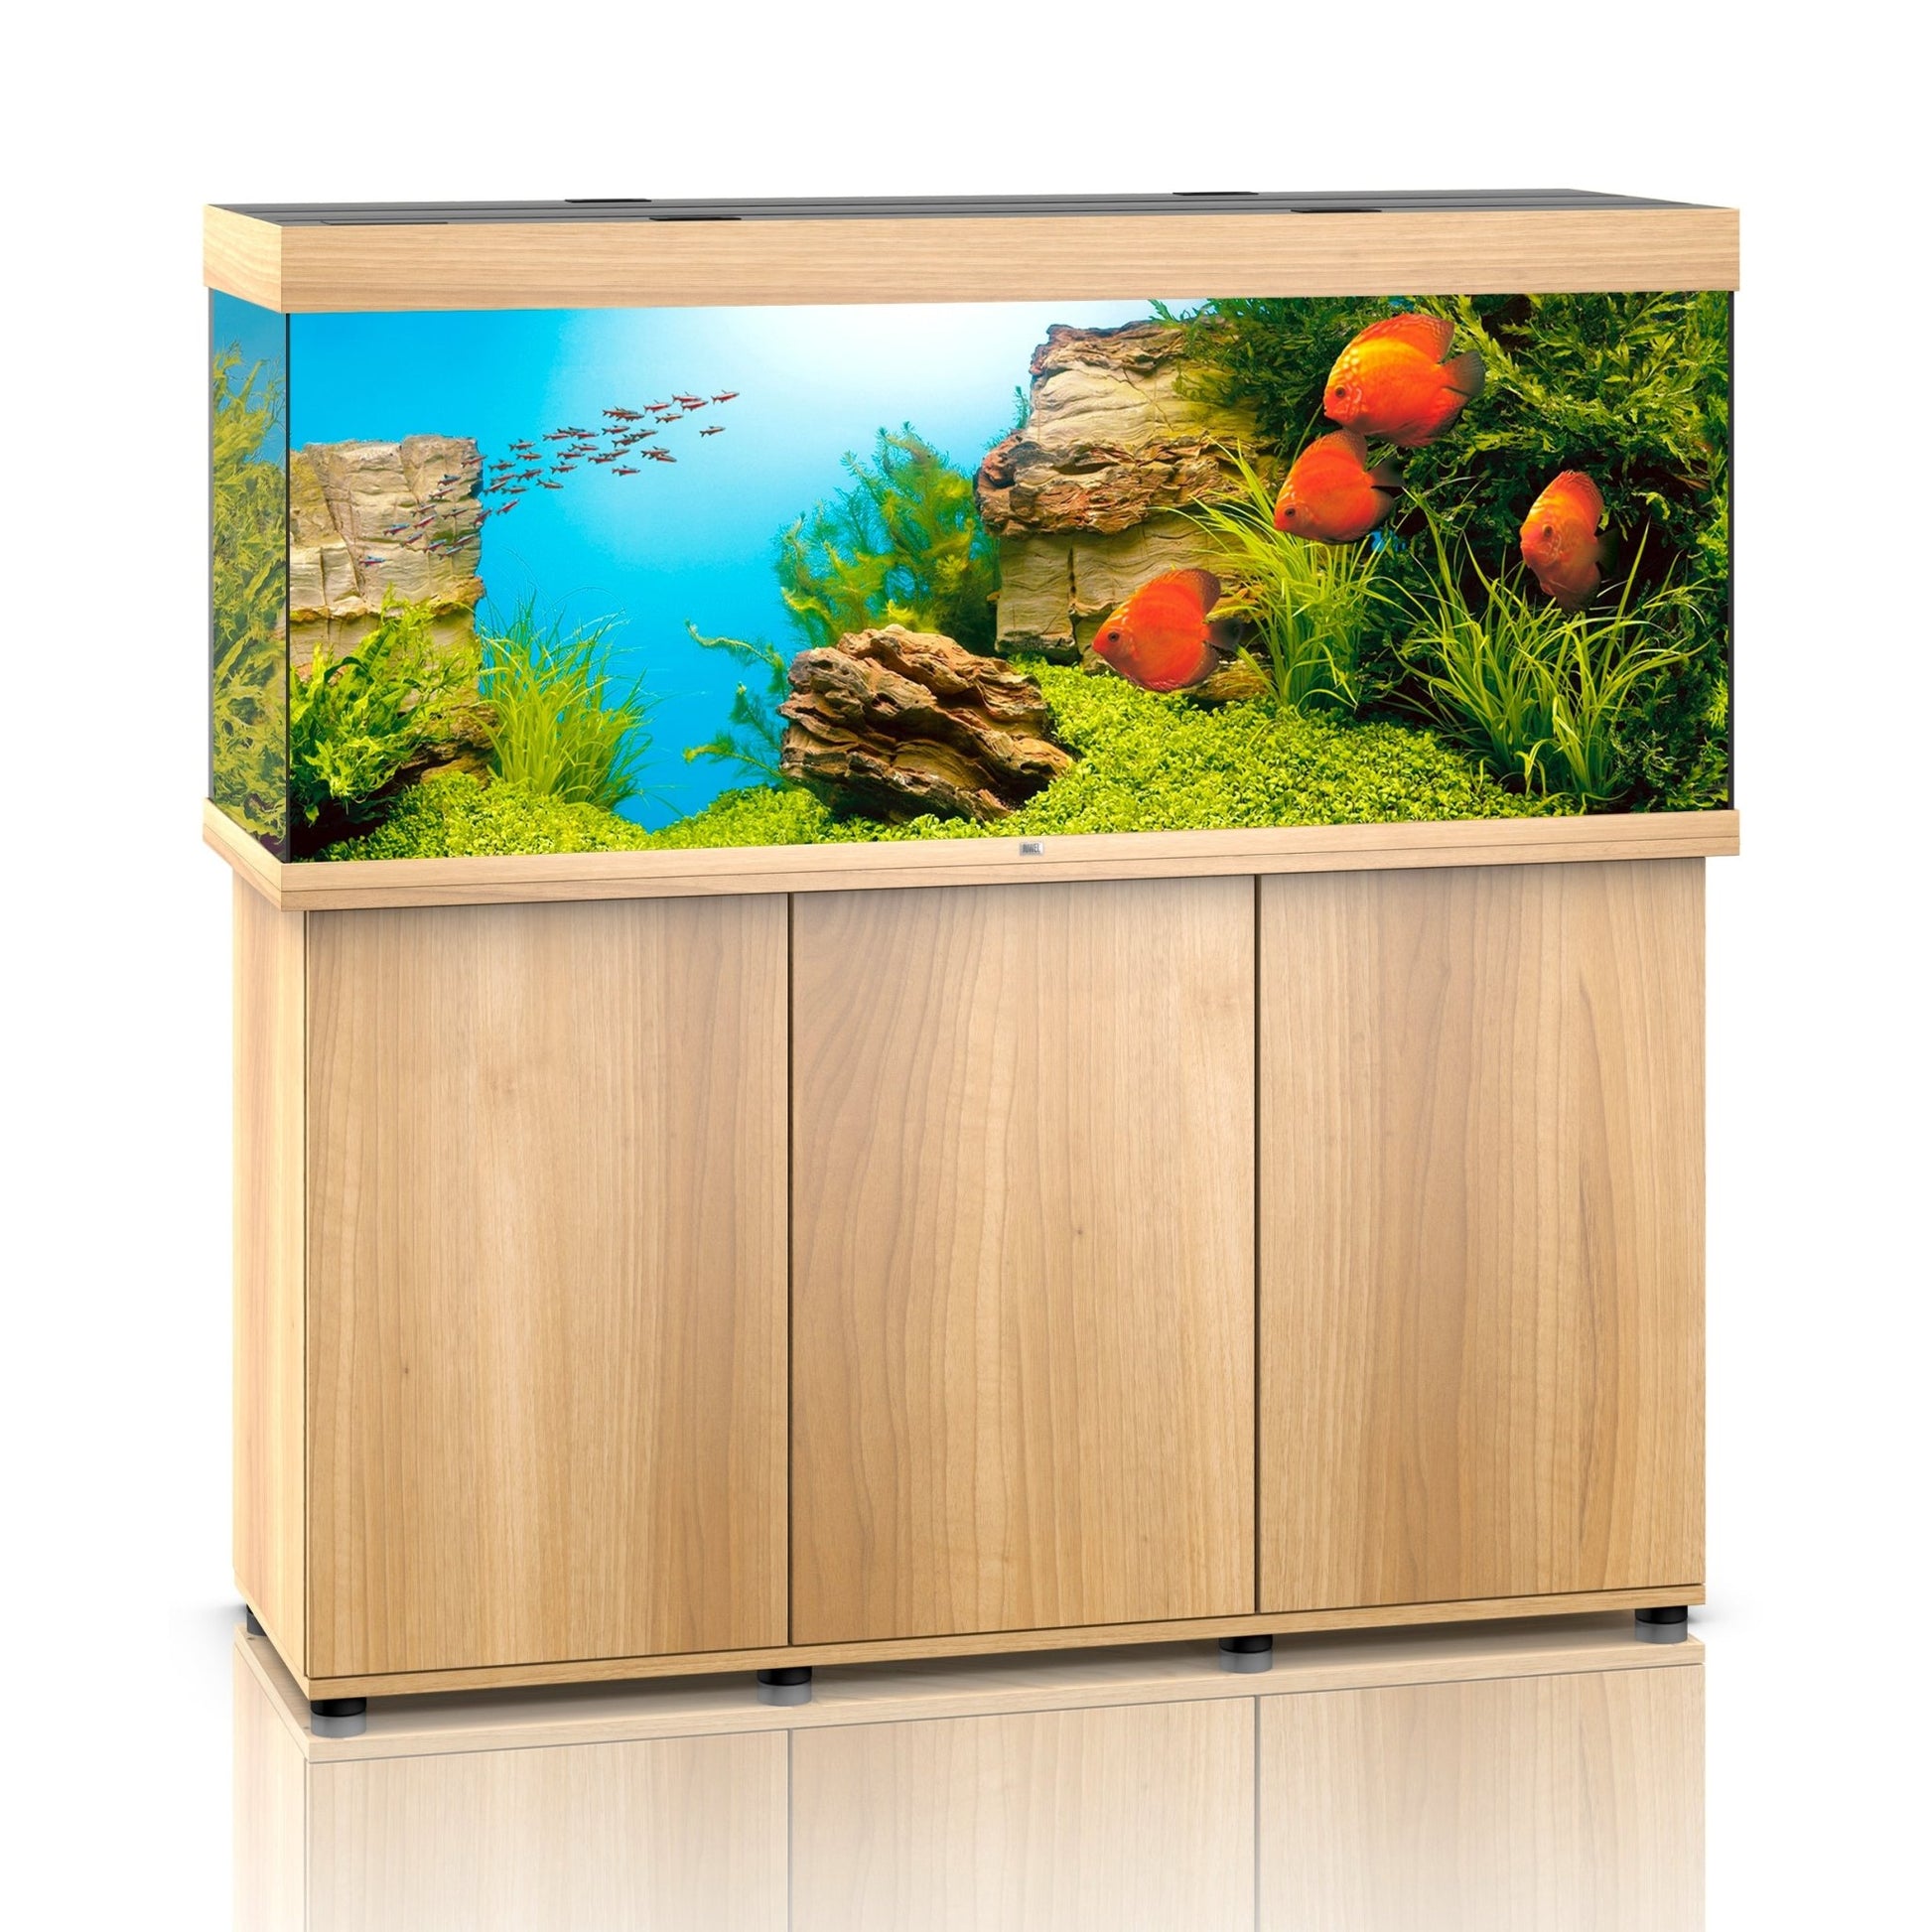 Juwel Rio 450 LED Aquarium And Cabinet (Light Wood) - Charterhouse Aquatics